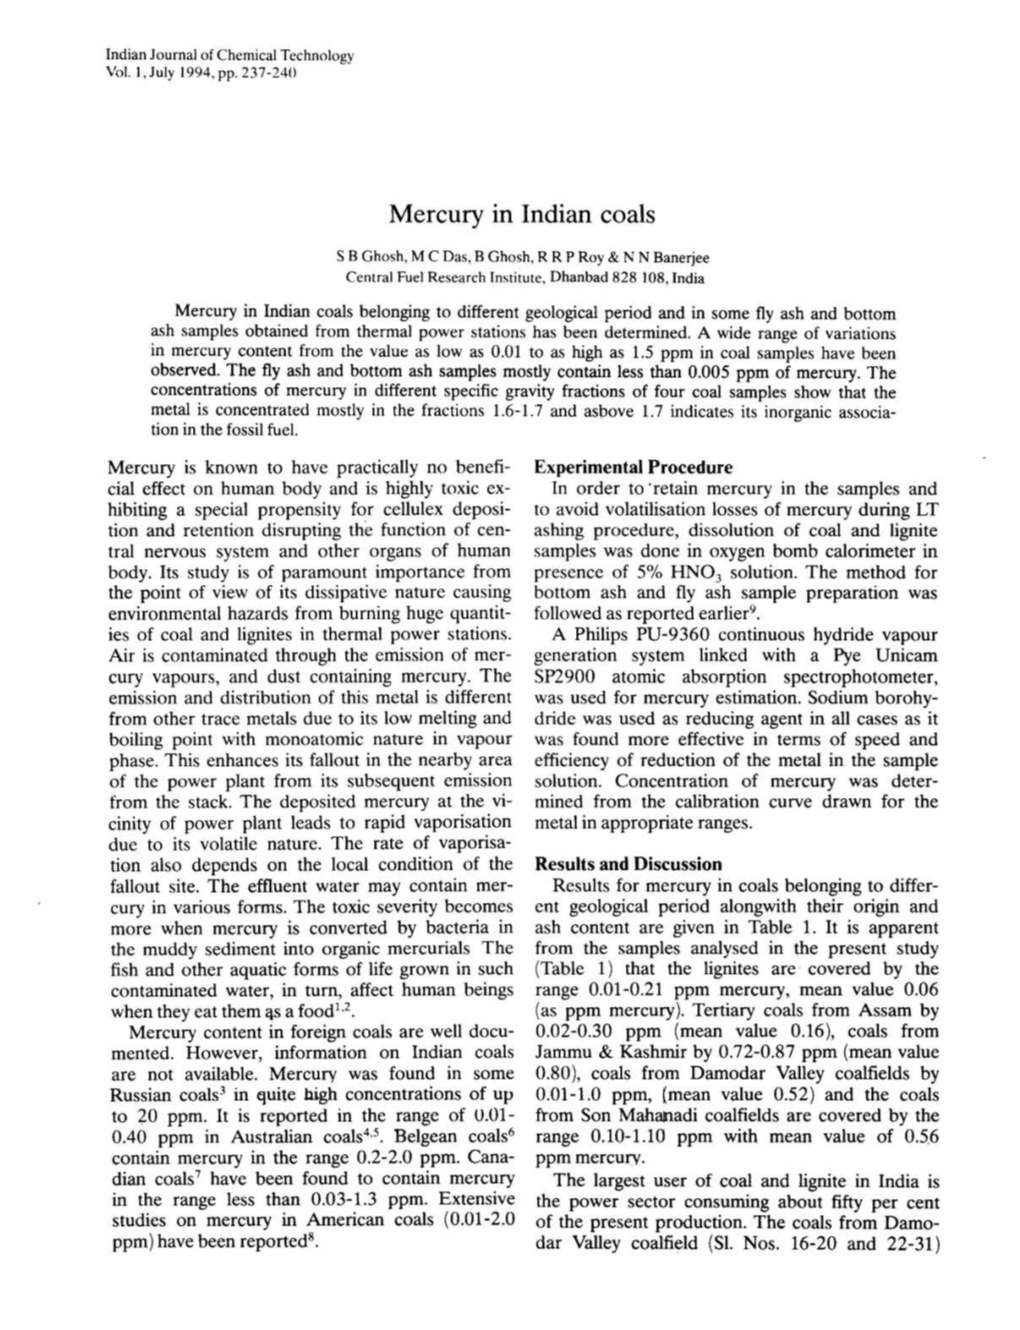 Mercury in Indian Coals